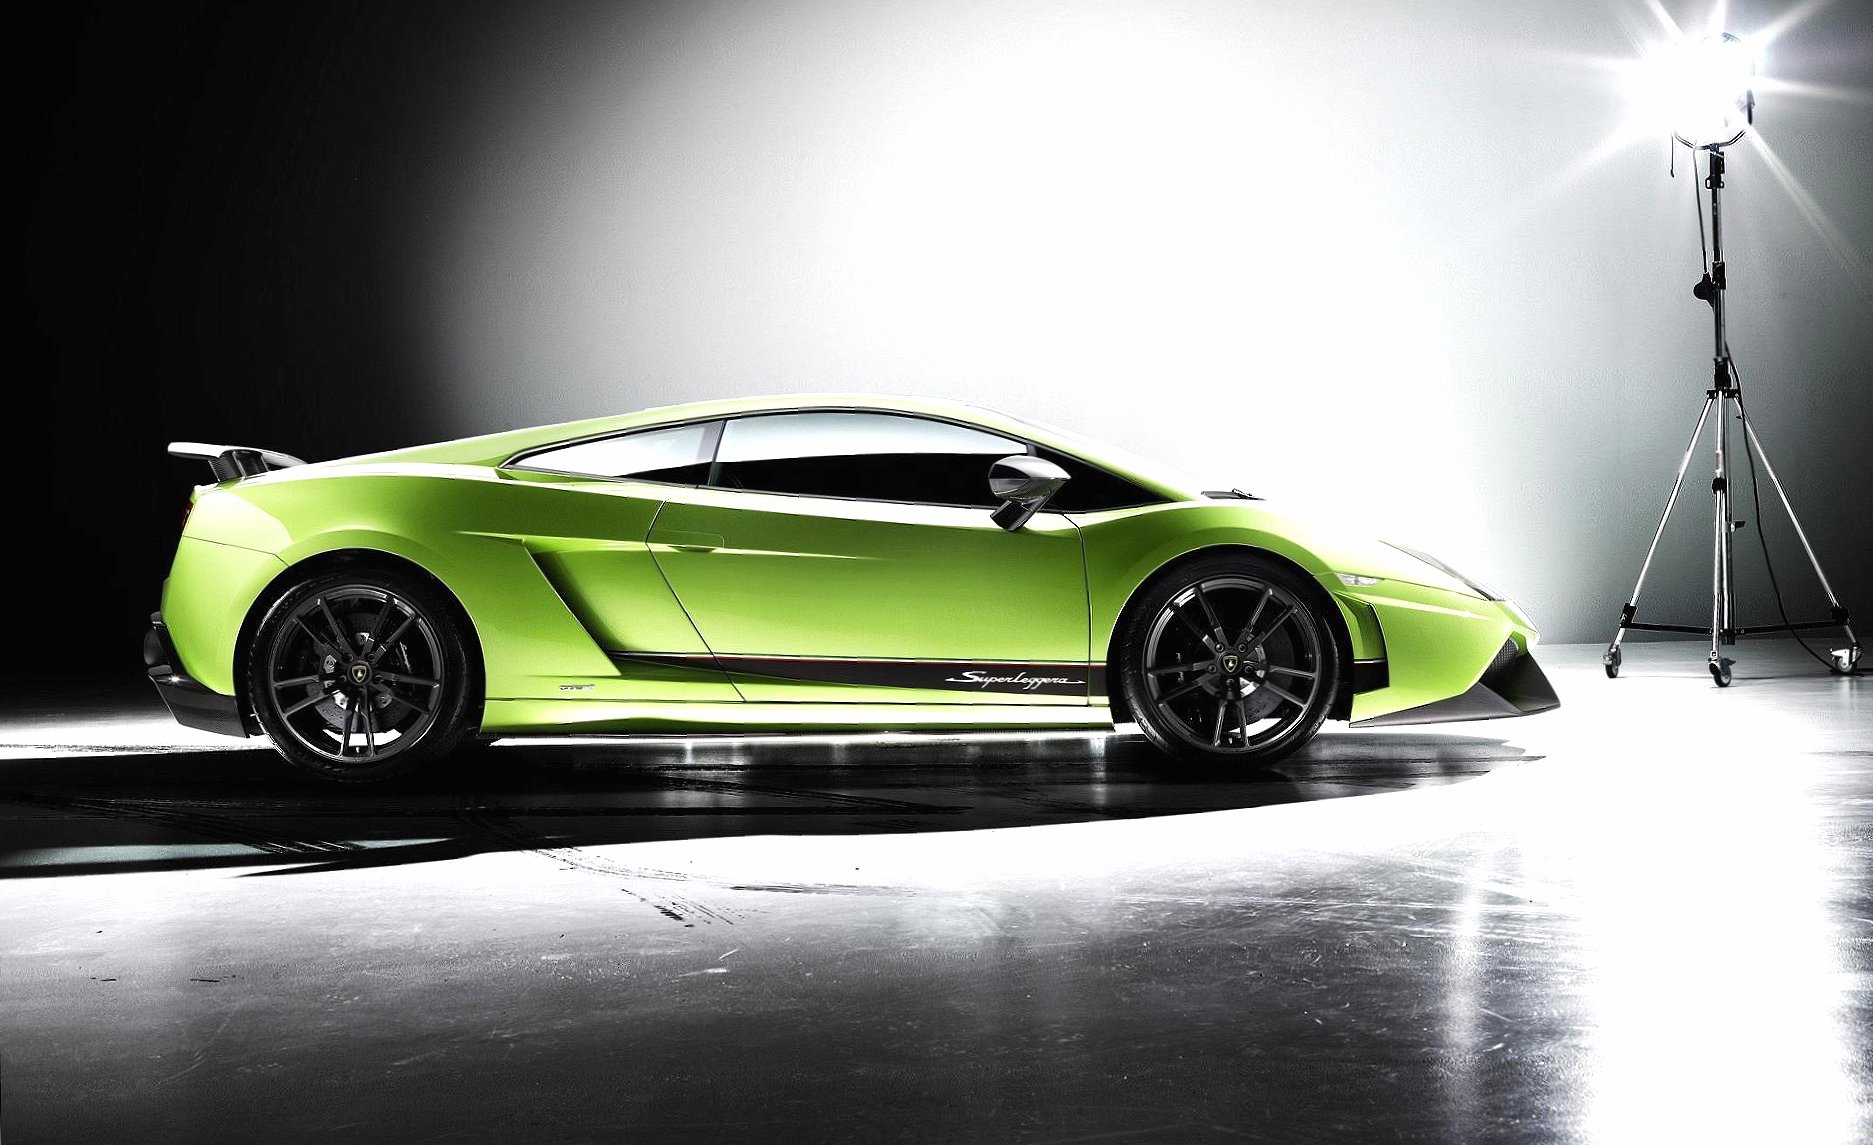 Lamborghini gallardo lp 570 4 superleggera at 640 x 1136 iPhone 5 size wallpapers HD quality